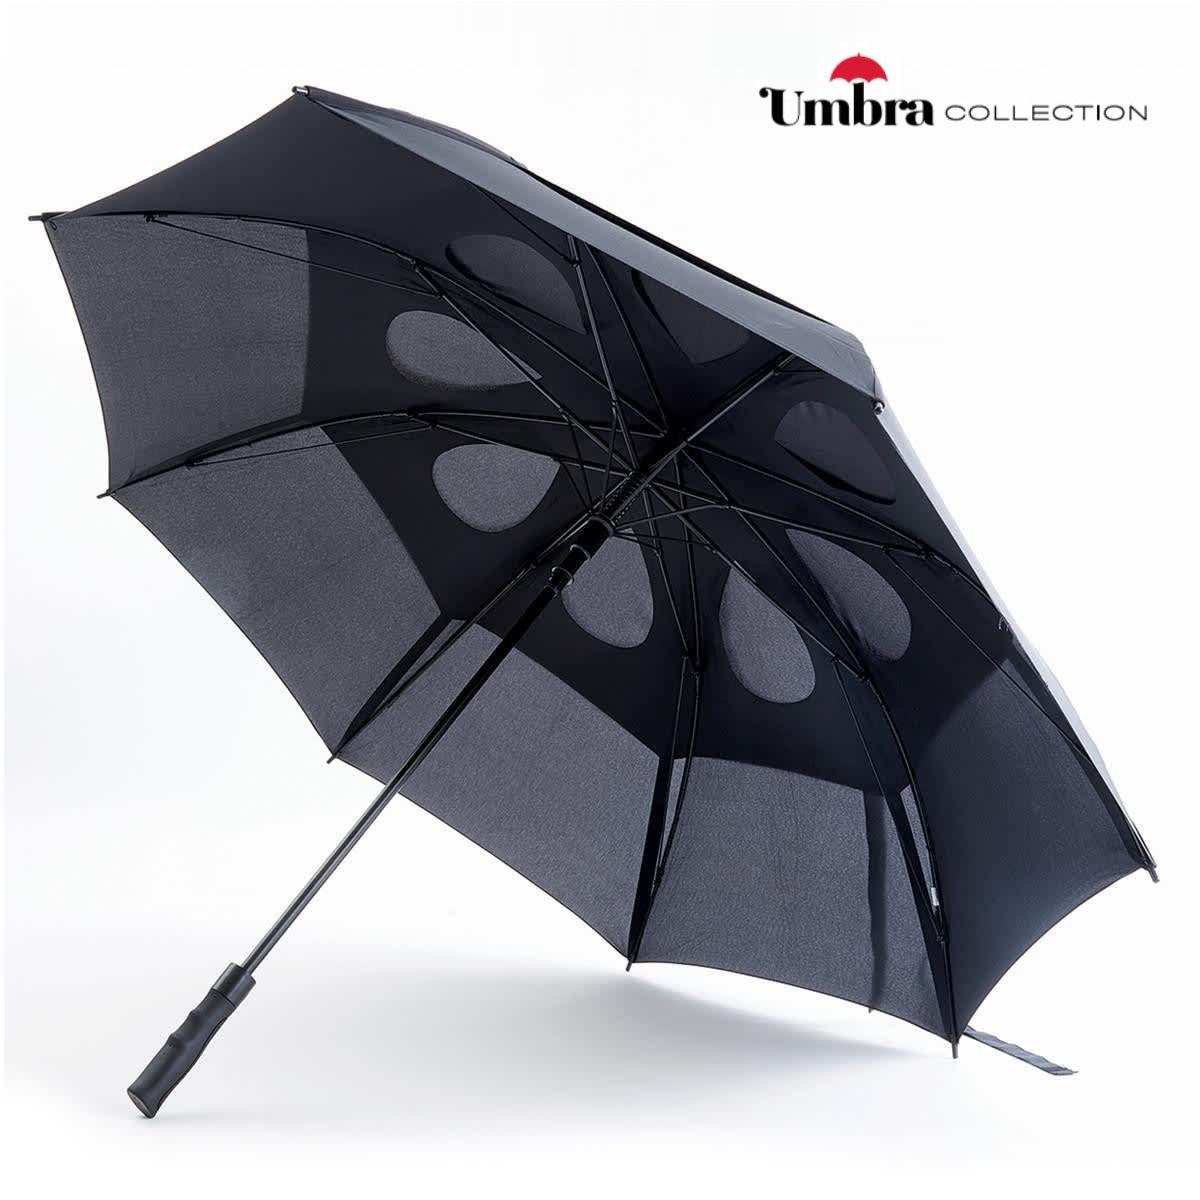 Umbra®️-ultimate-heavy-duty-storm-proof-umbrella-fibreglass-frame-double-layer-wind-vent-system-auto-open-black-7